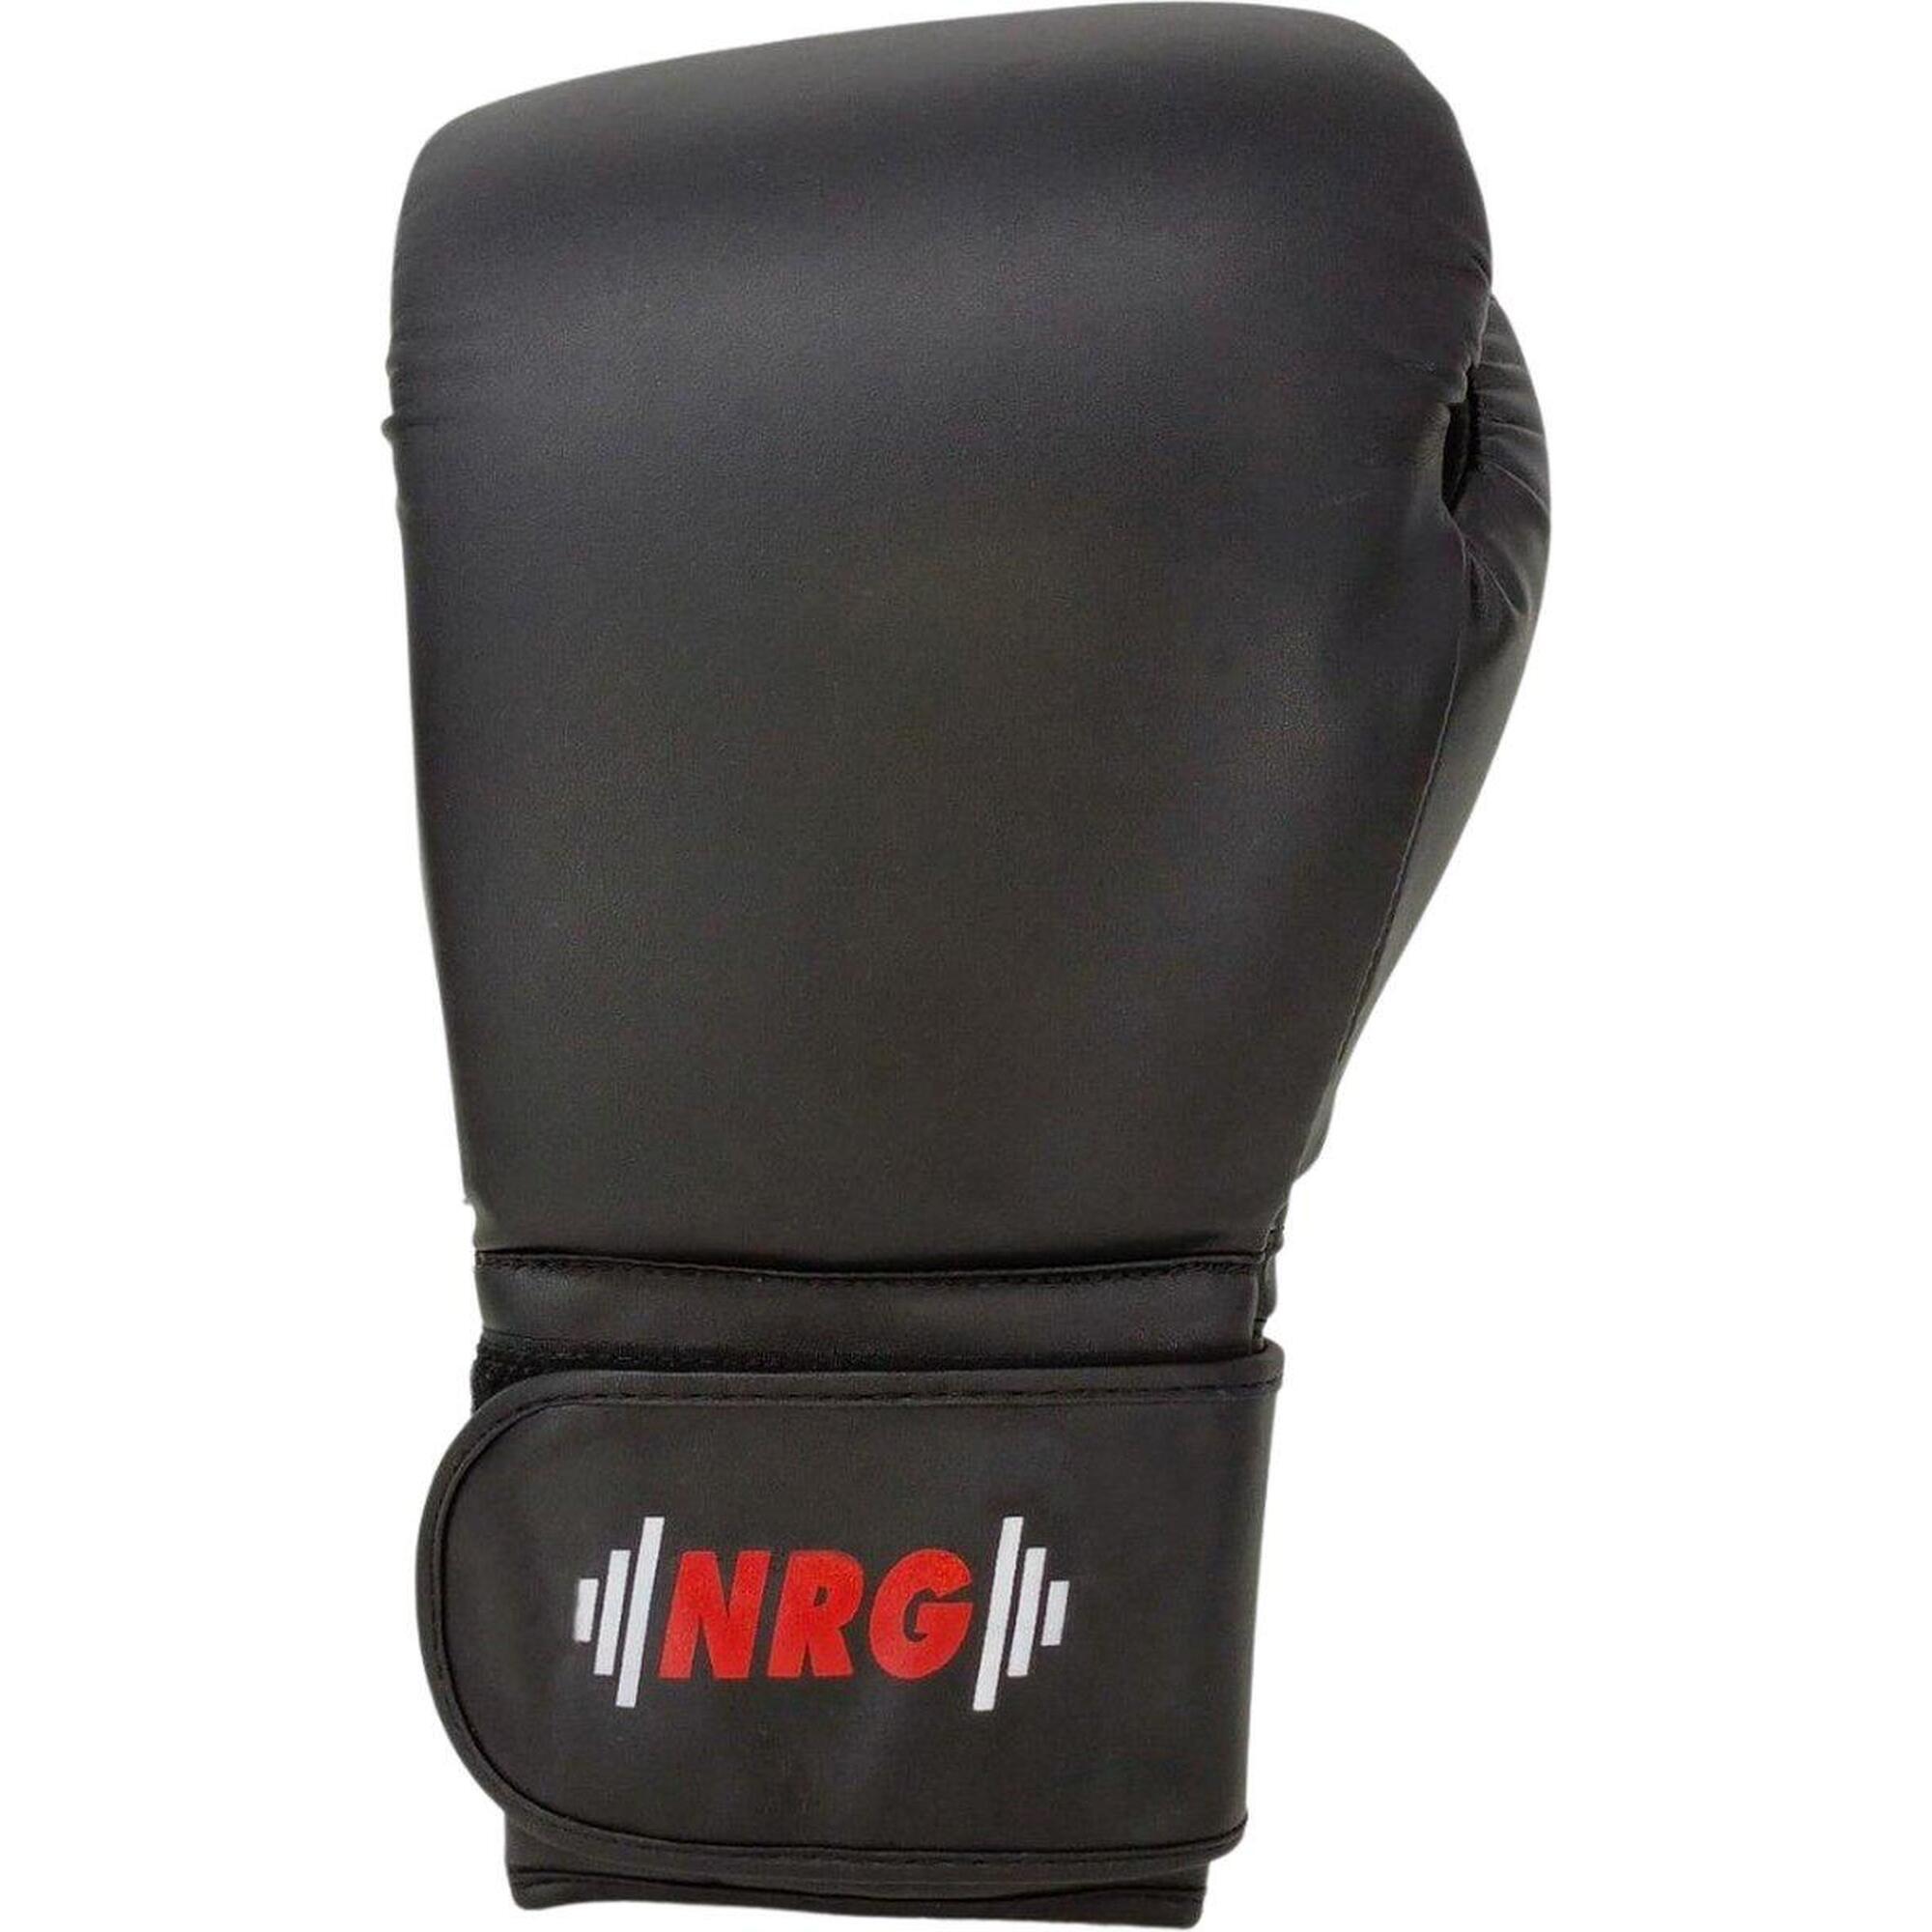 F4 Bokshandschoenen - Boxing Gloves - Zwart - 12OZ